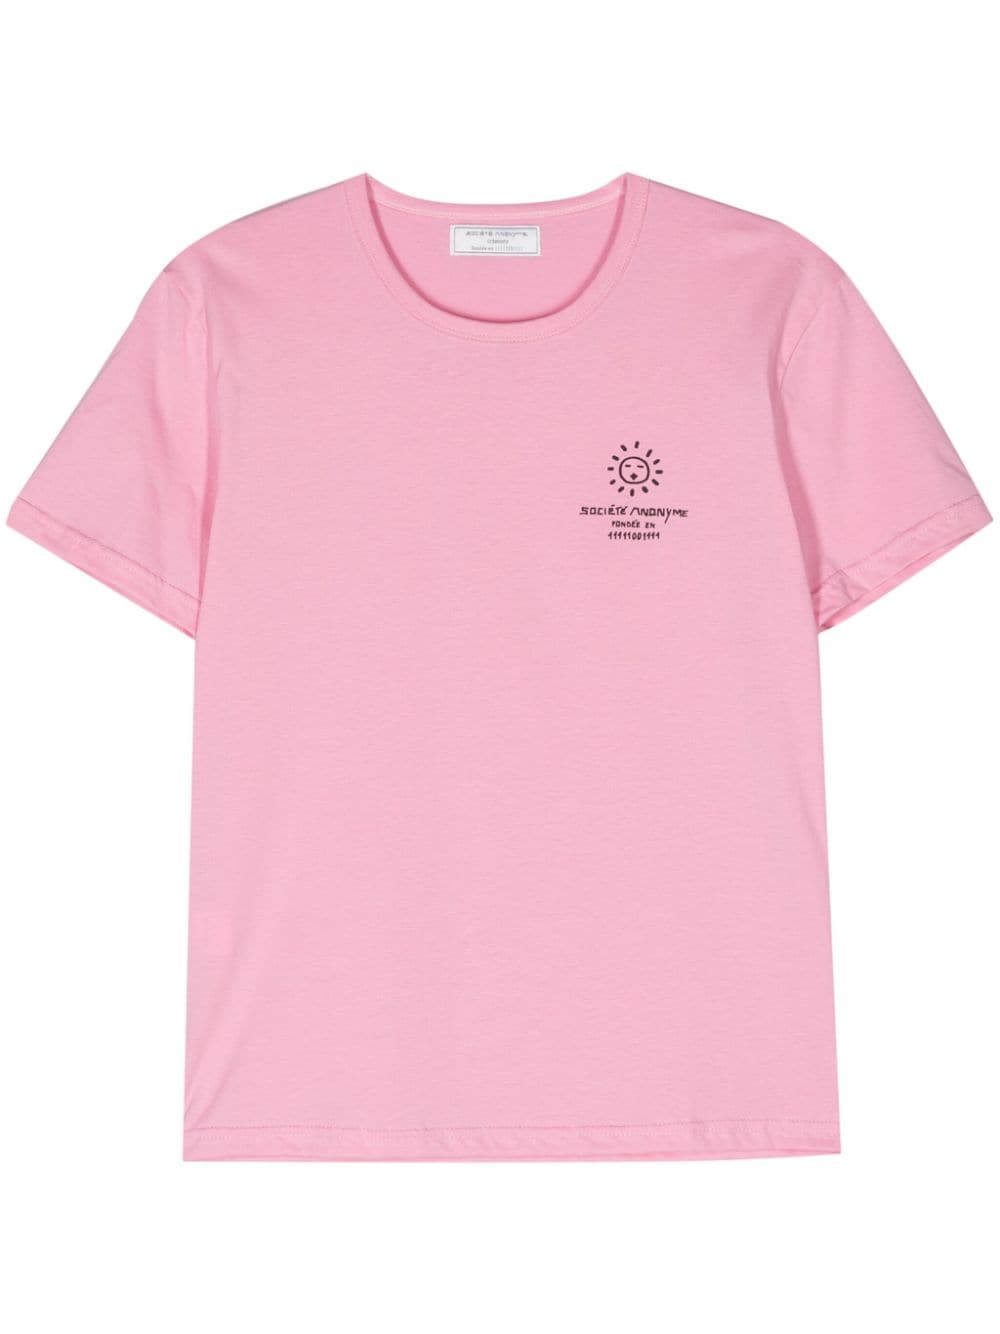 société anonyme t-shirt bas - rose